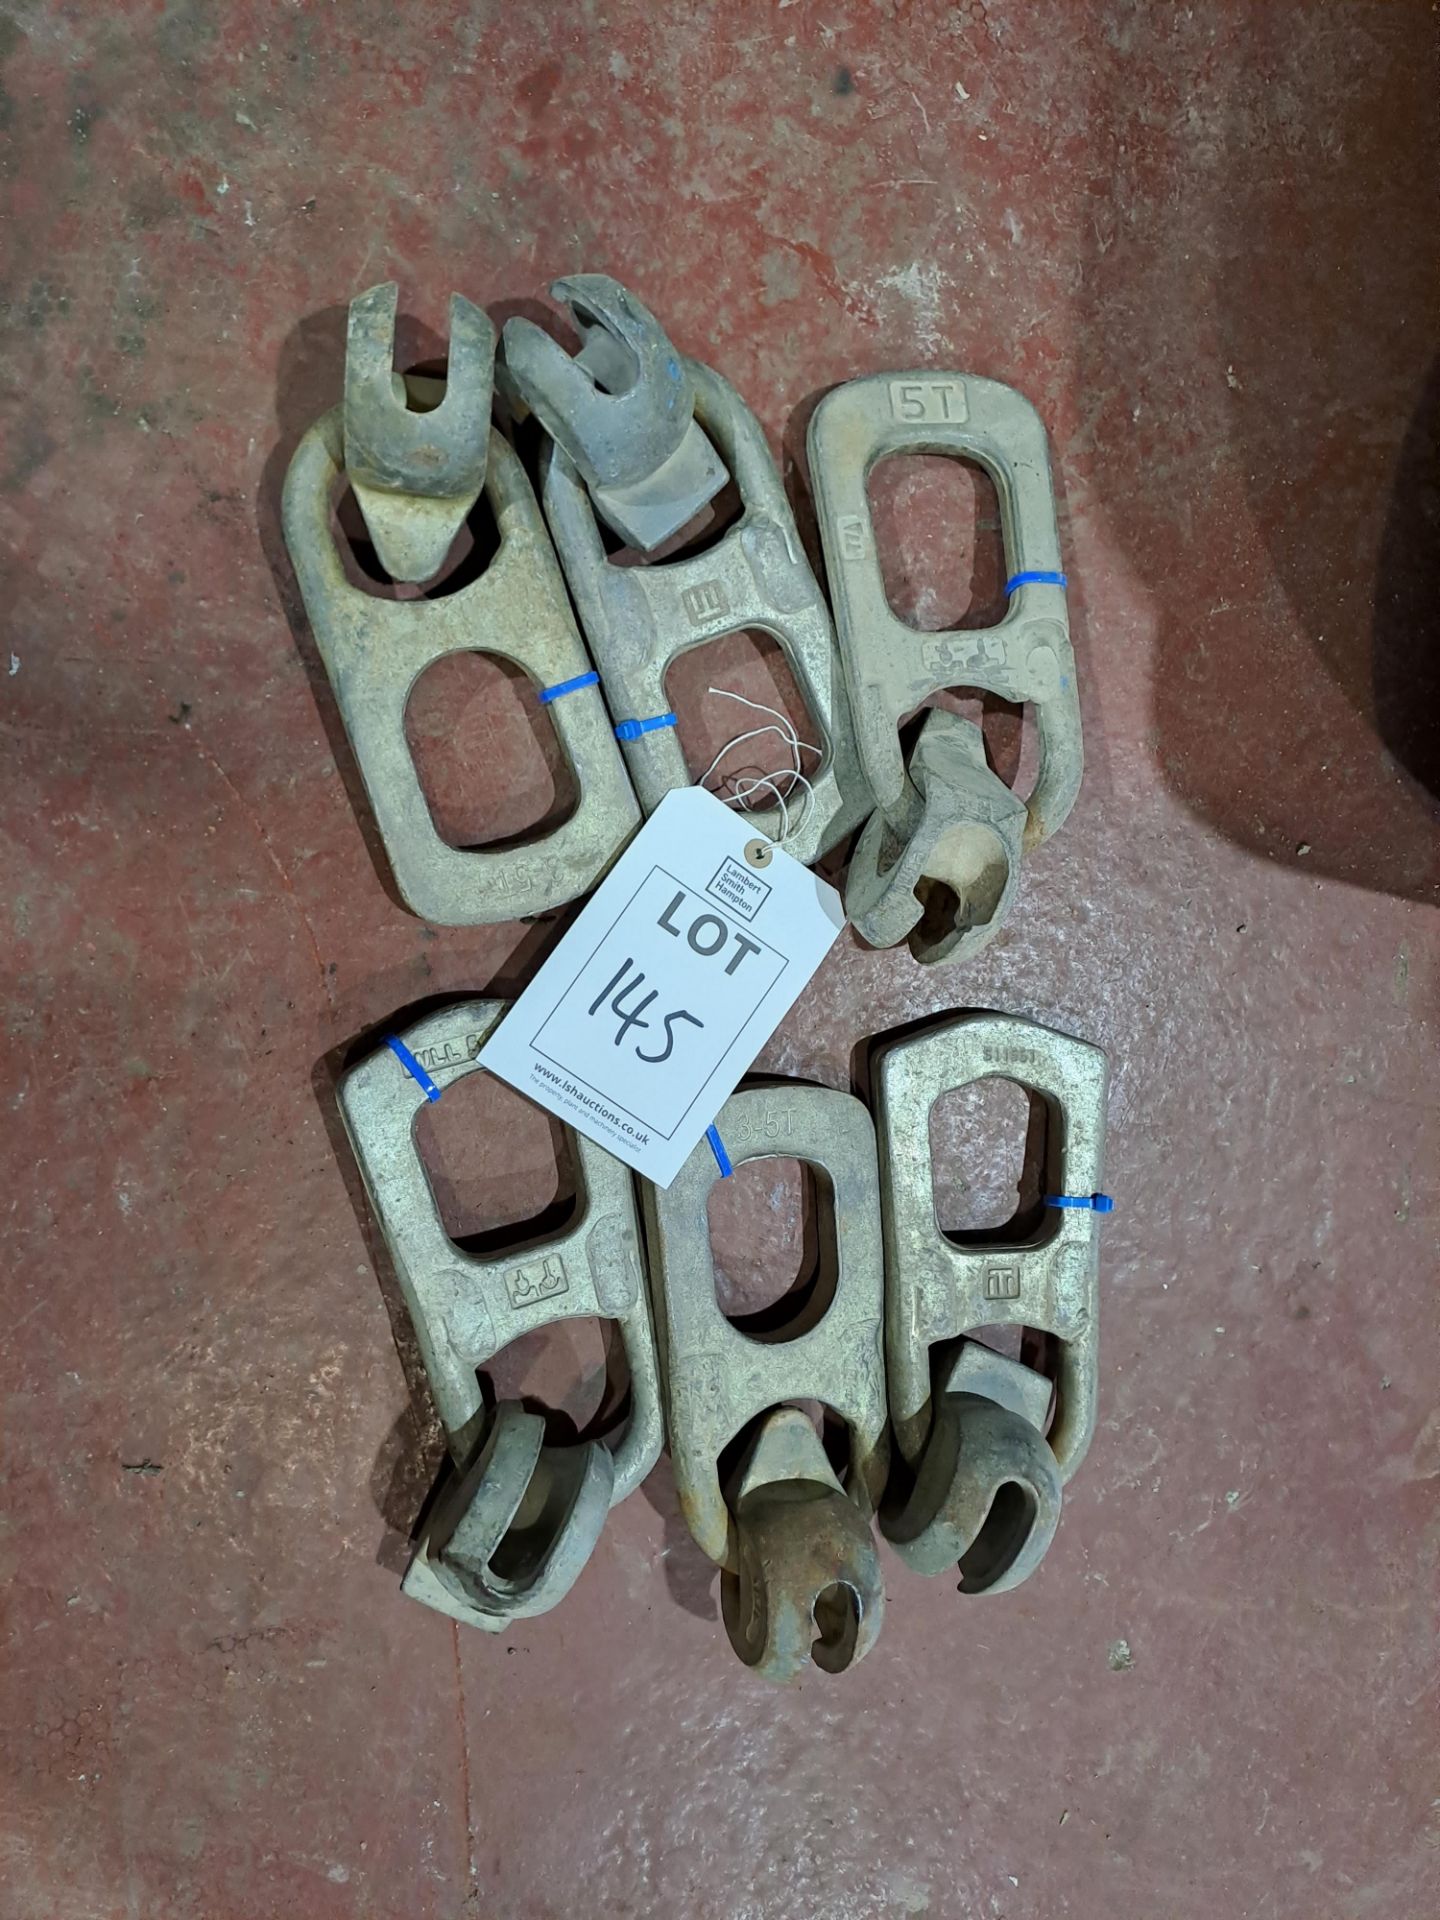 6 x 3-5ton lifting clutches (spud locks), 25mm NB: This item has no record of Thorough